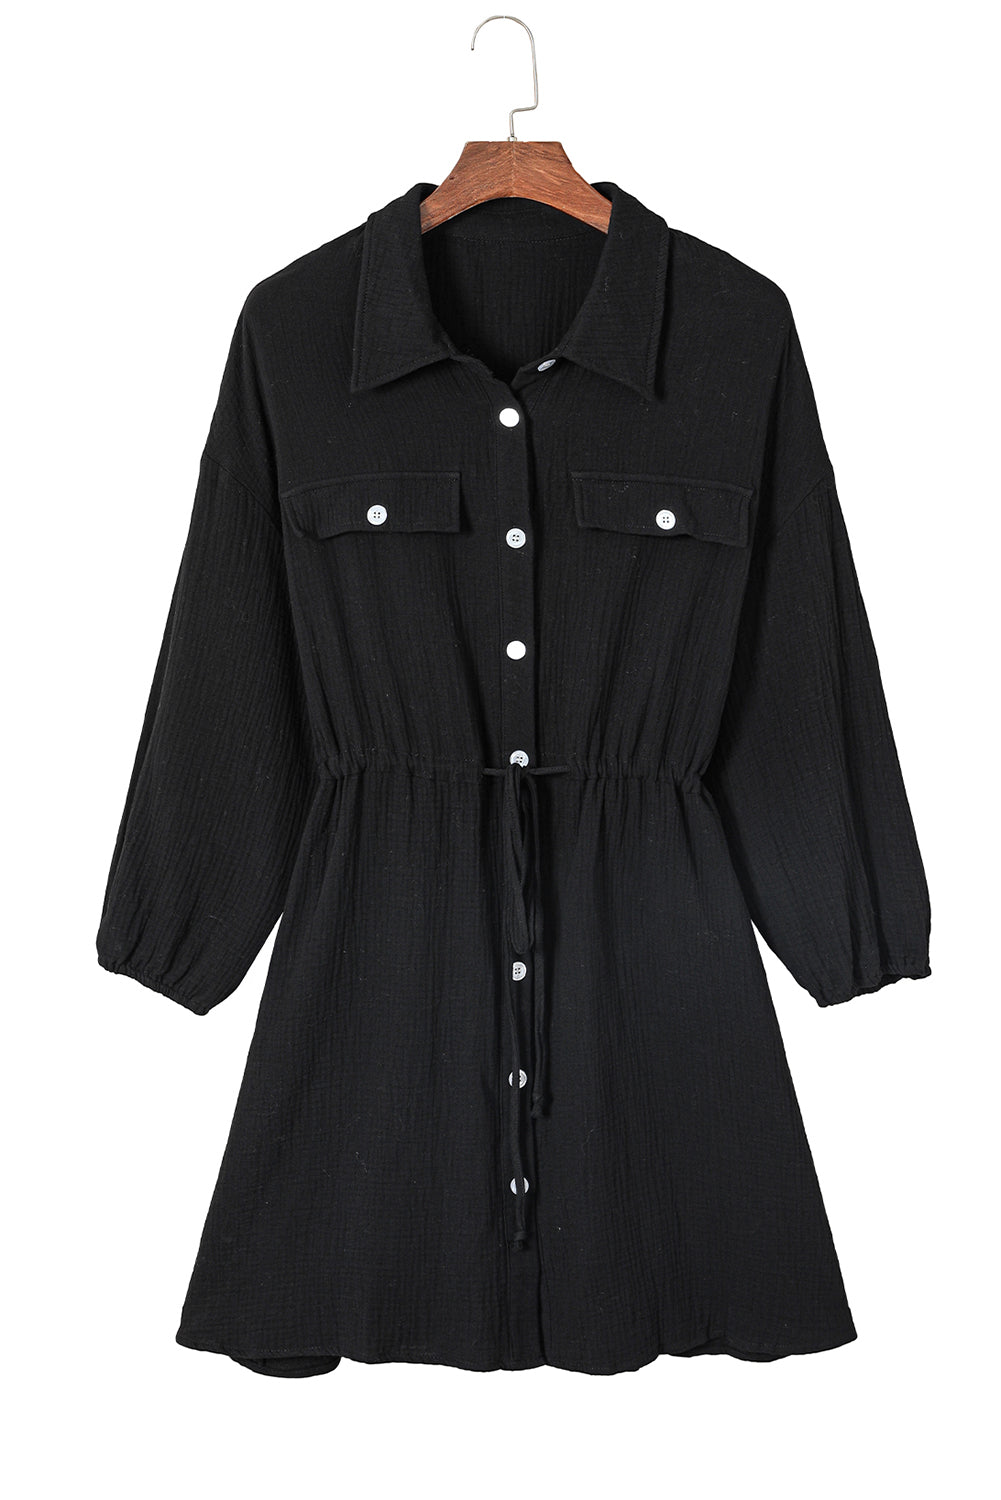 Black Plus Size Textured Drawstring Button up Shirt Dress